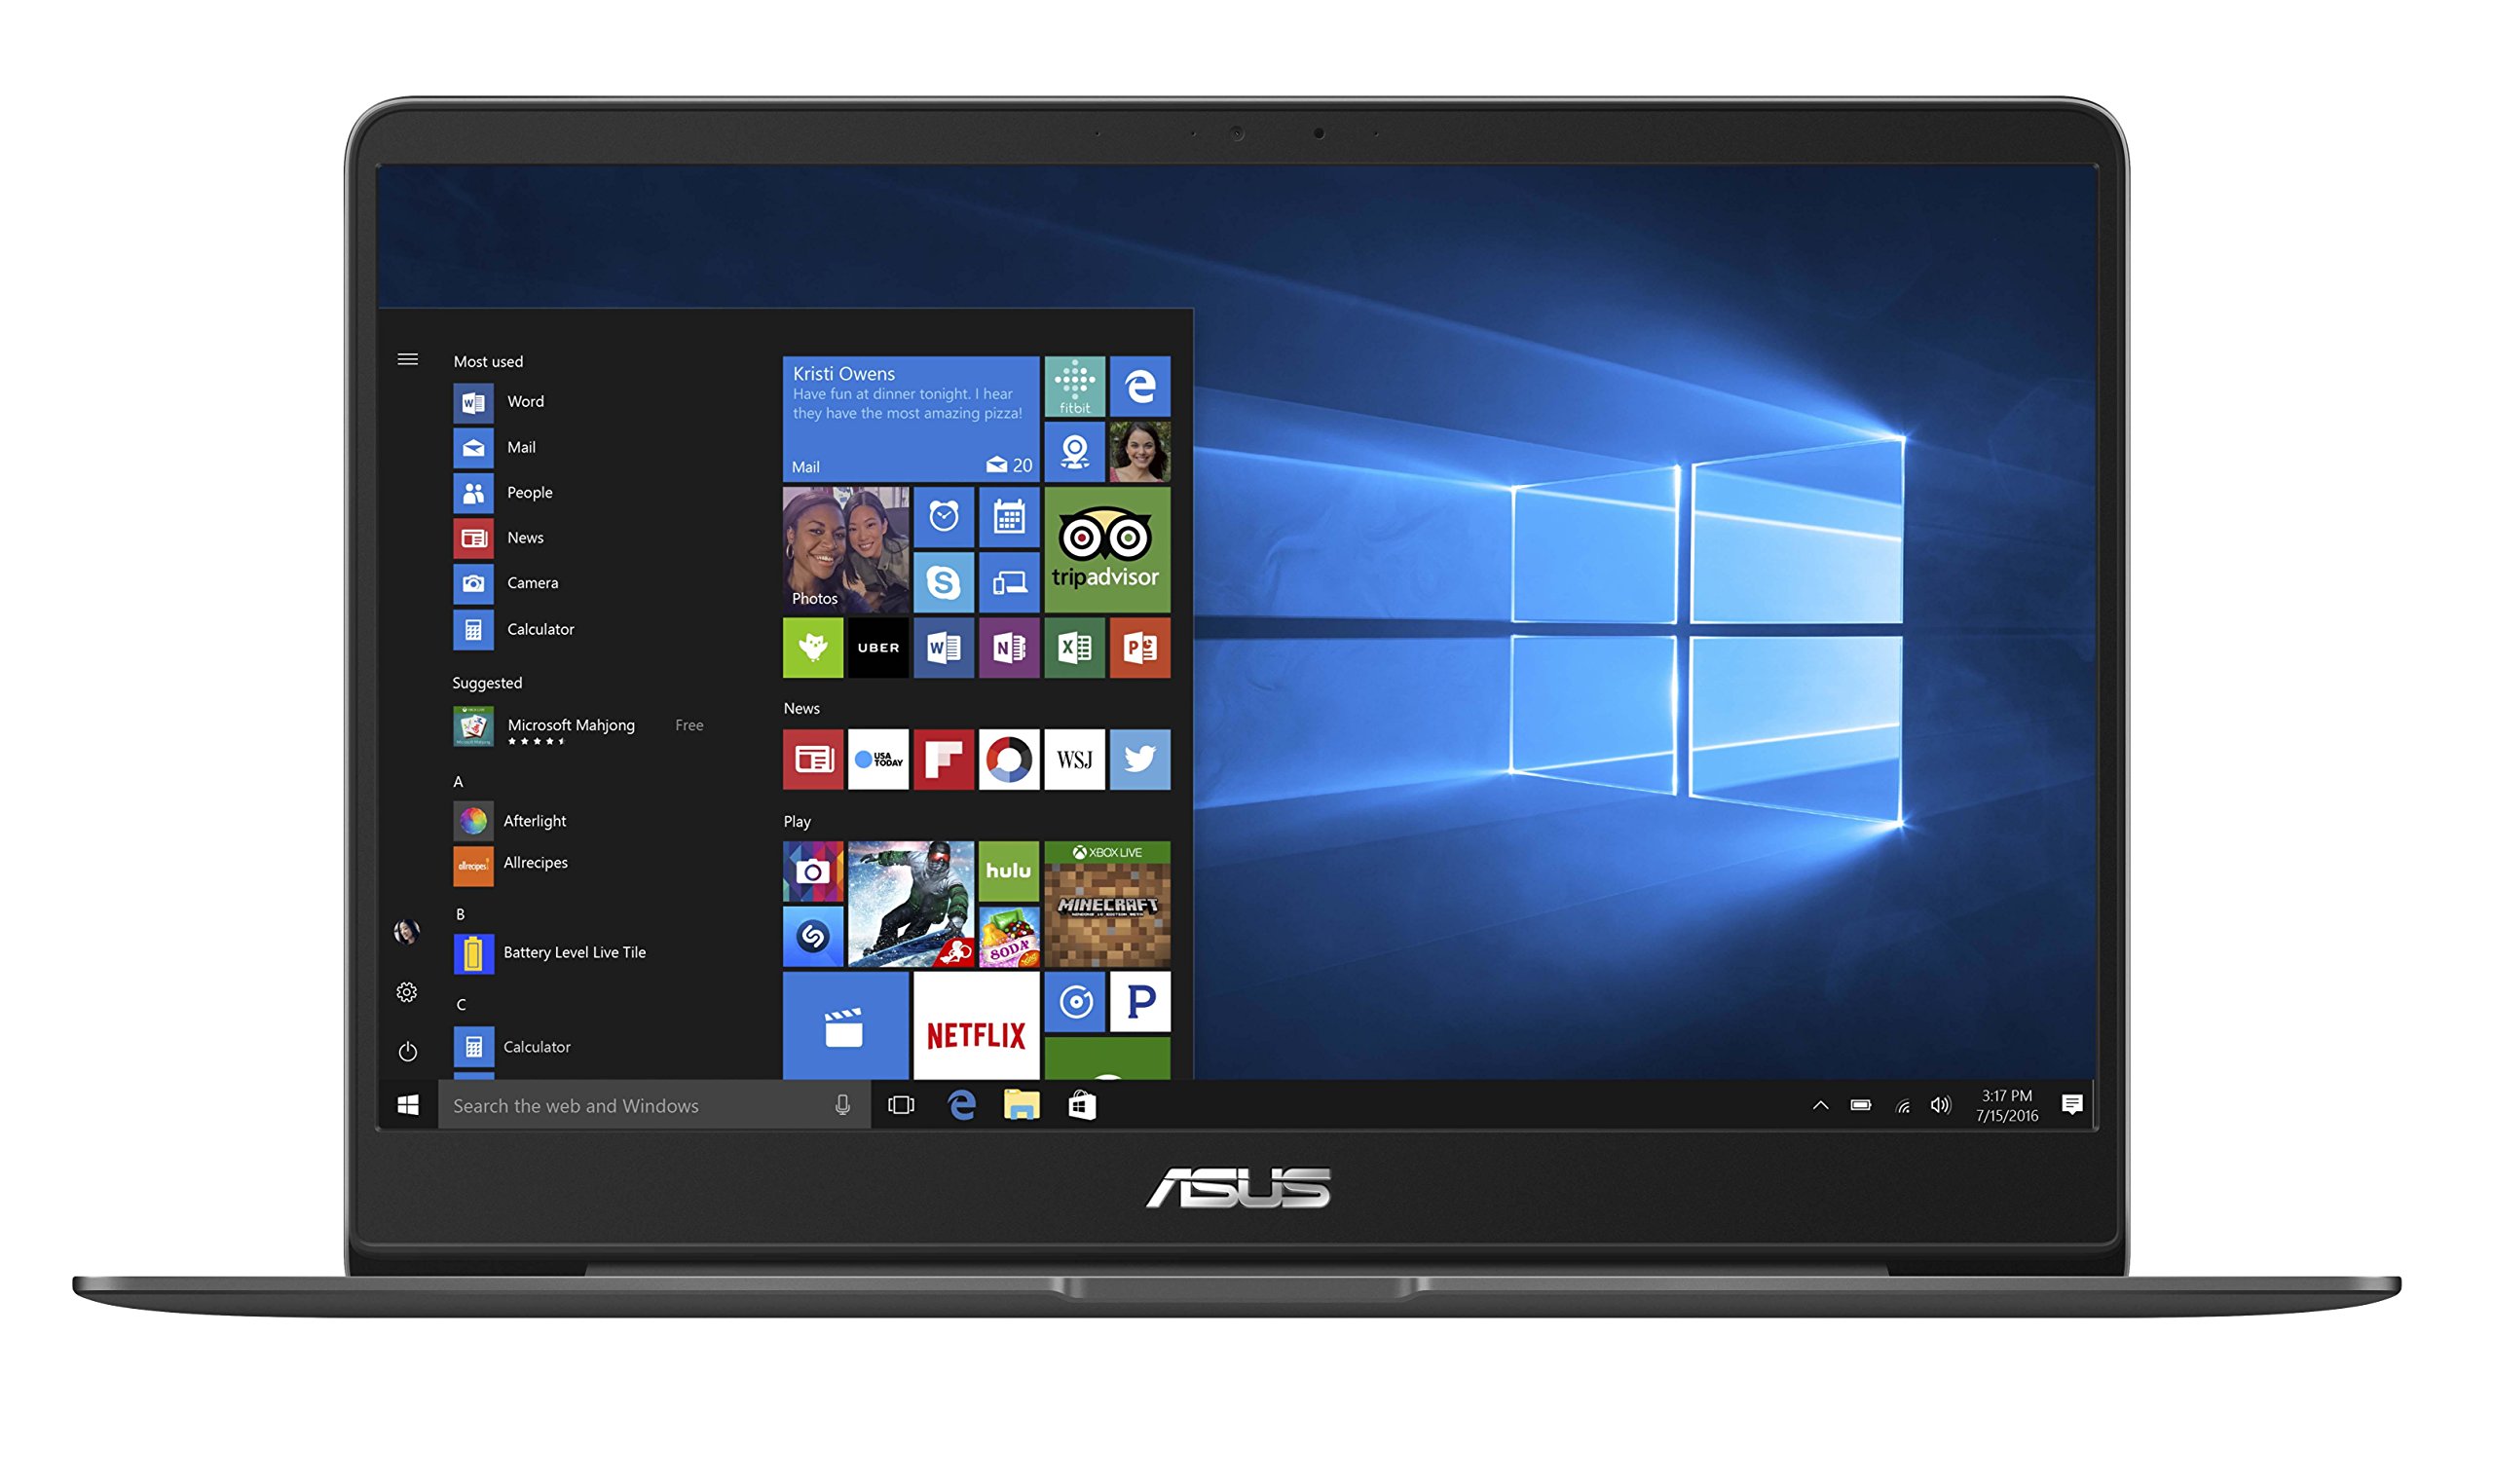 ASUS ZenBook 14 Thin and Light Laptop - 14” Full HD WideView, 8th gen Core i7-8550U Processor, 16GB DDR3, 512GB SSD, Backlit KB, Fingerprint Reader, Grey, Windows 10 Home - UX430UA-DH74